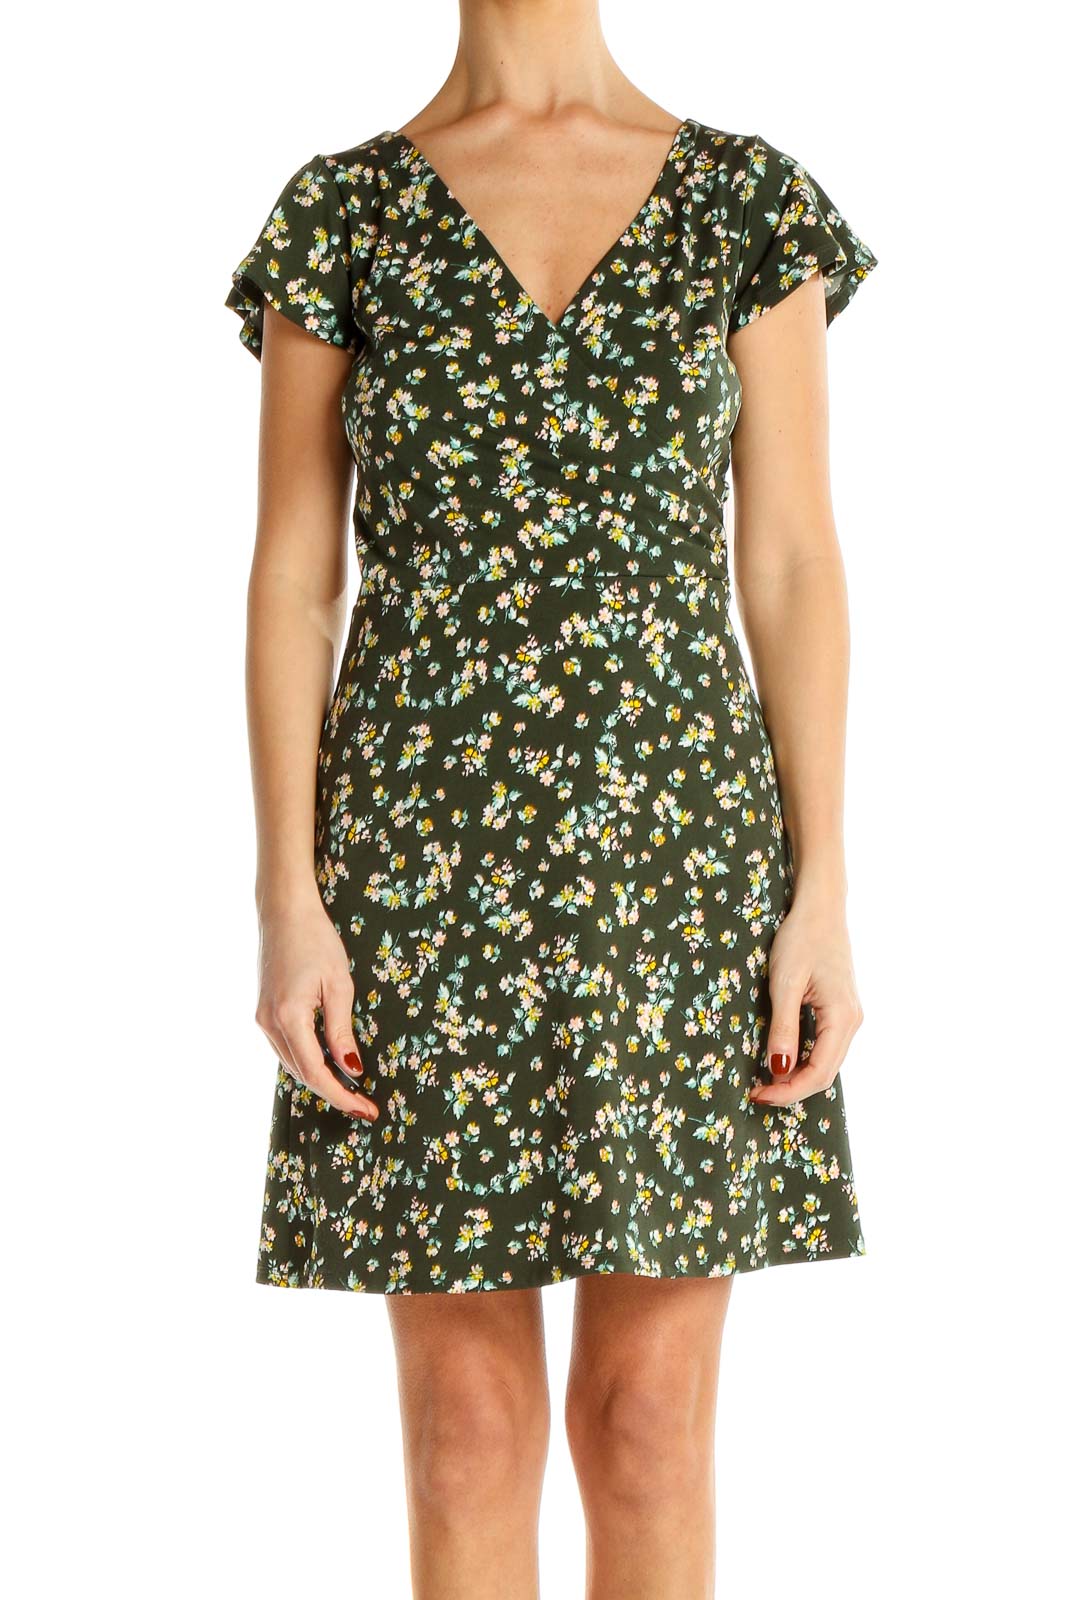 Green Floral Print Mini Dress Front